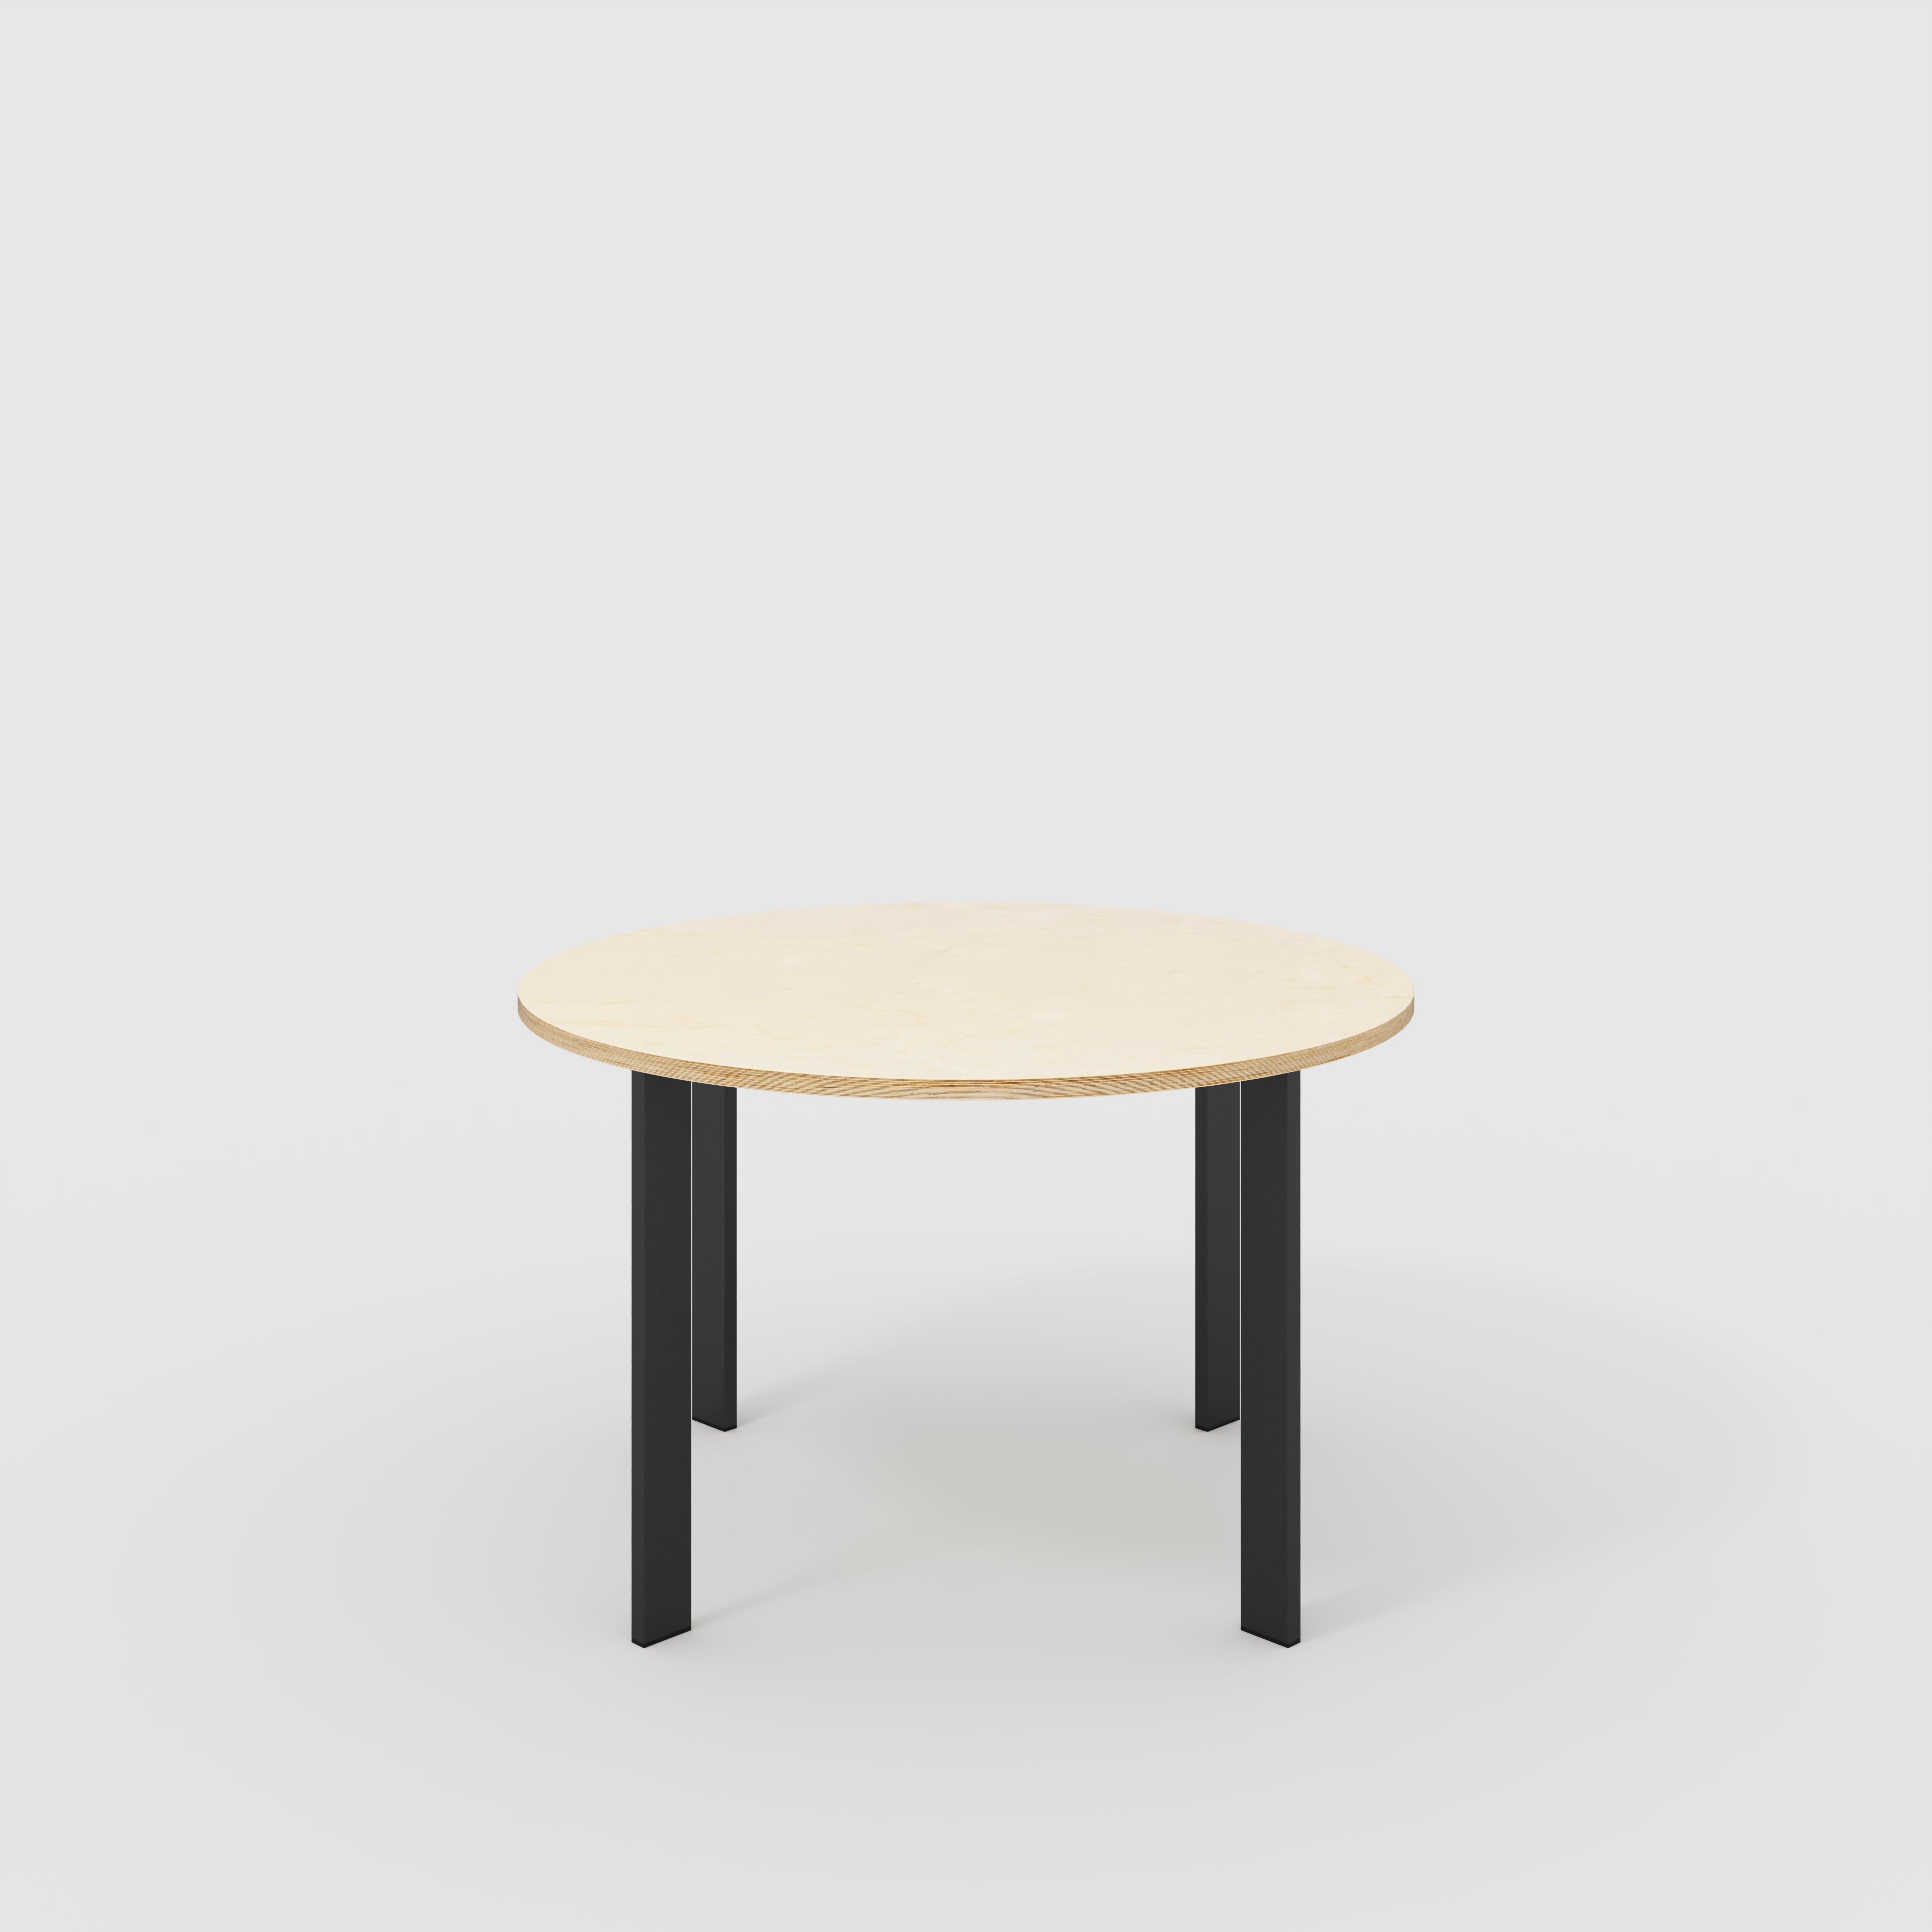 Round Table with Black Rectangular Single Pin Legs - Plywood Birch - 1200(dia) x 735(h)